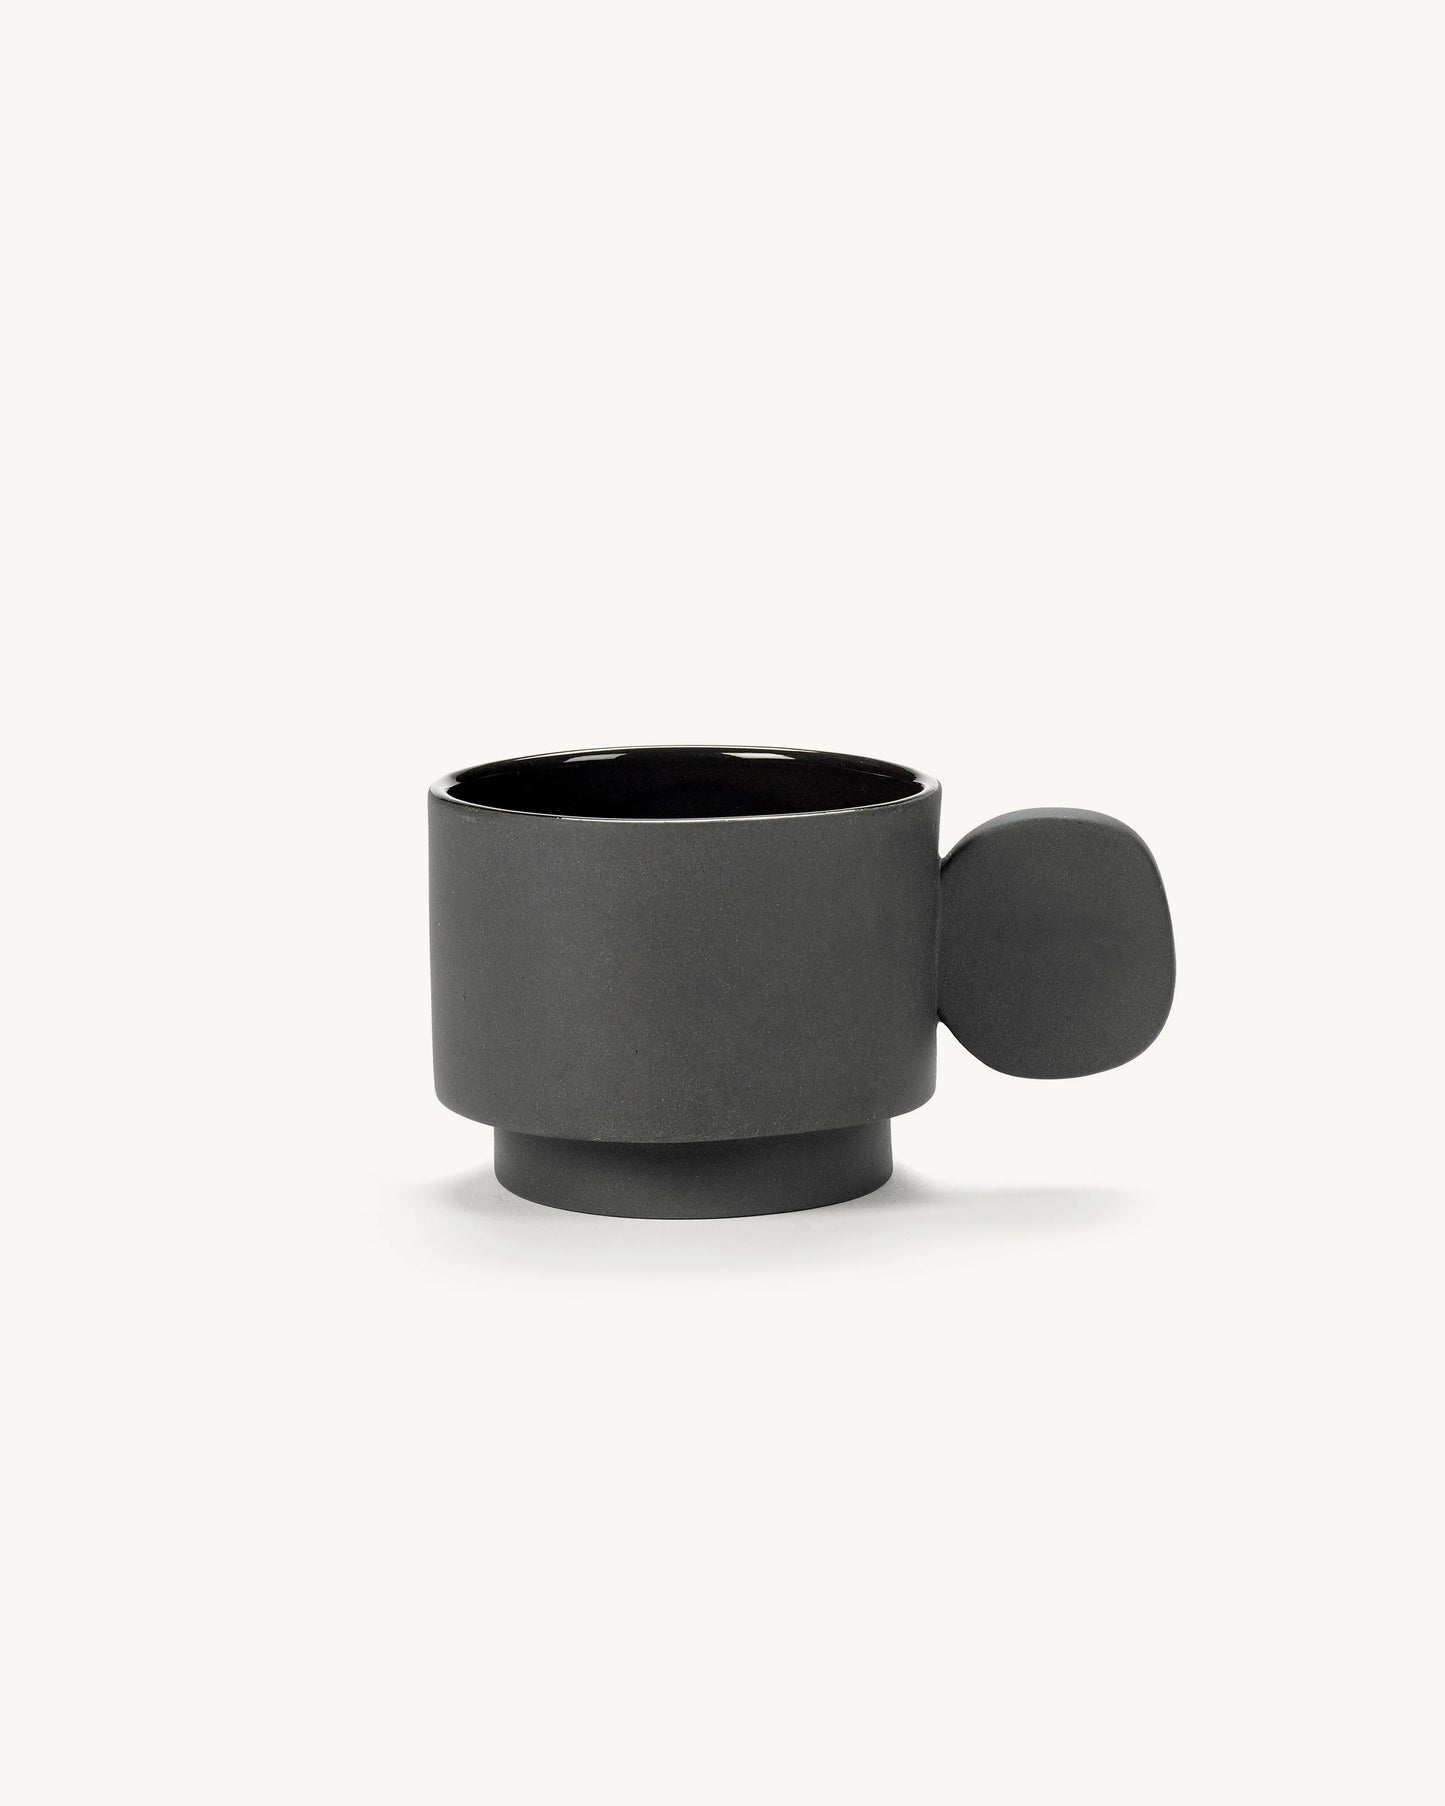 Valerie Objects Inner Circle Cup, grey by Maarten Baas - $24.00